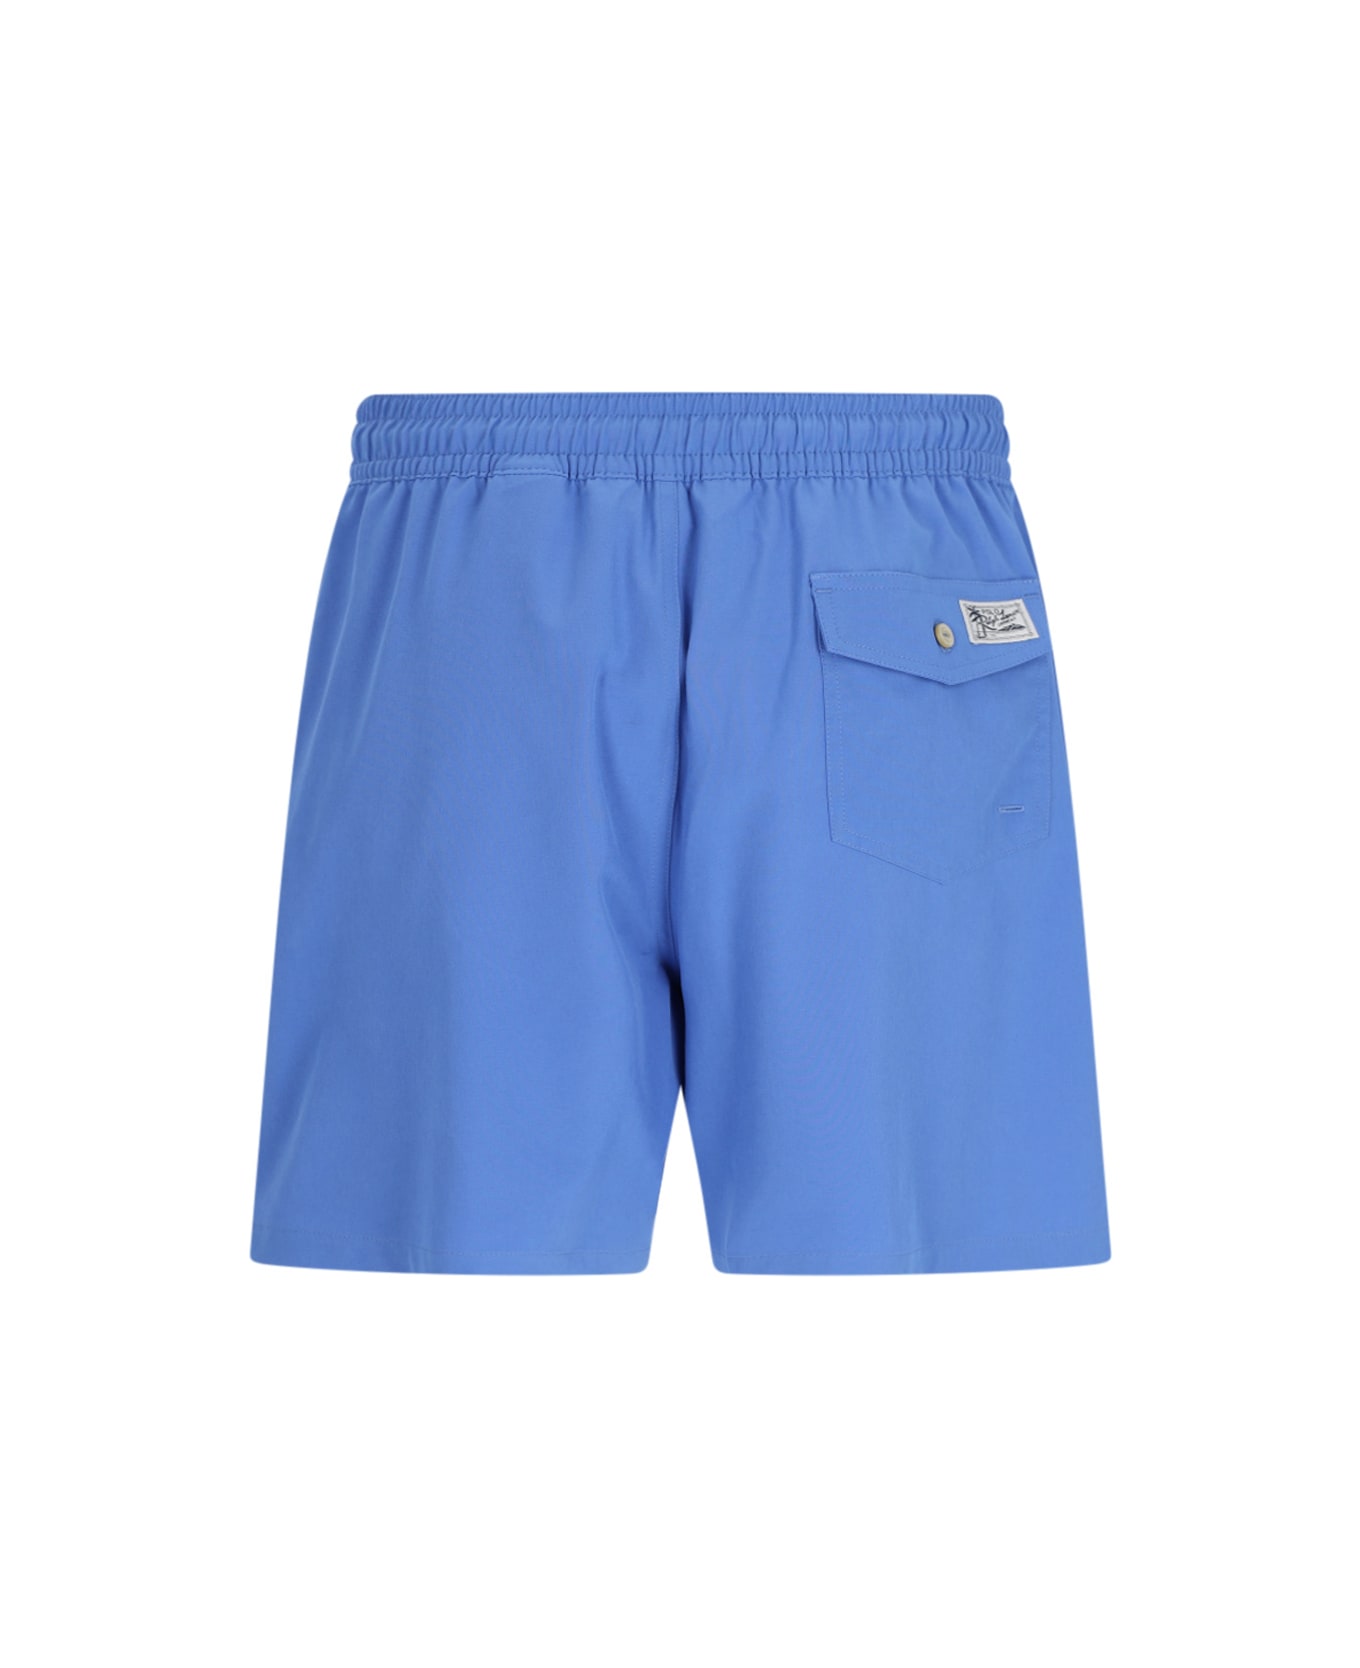 Polo Ralph Lauren 'traveler' Swim Shorts - Blue